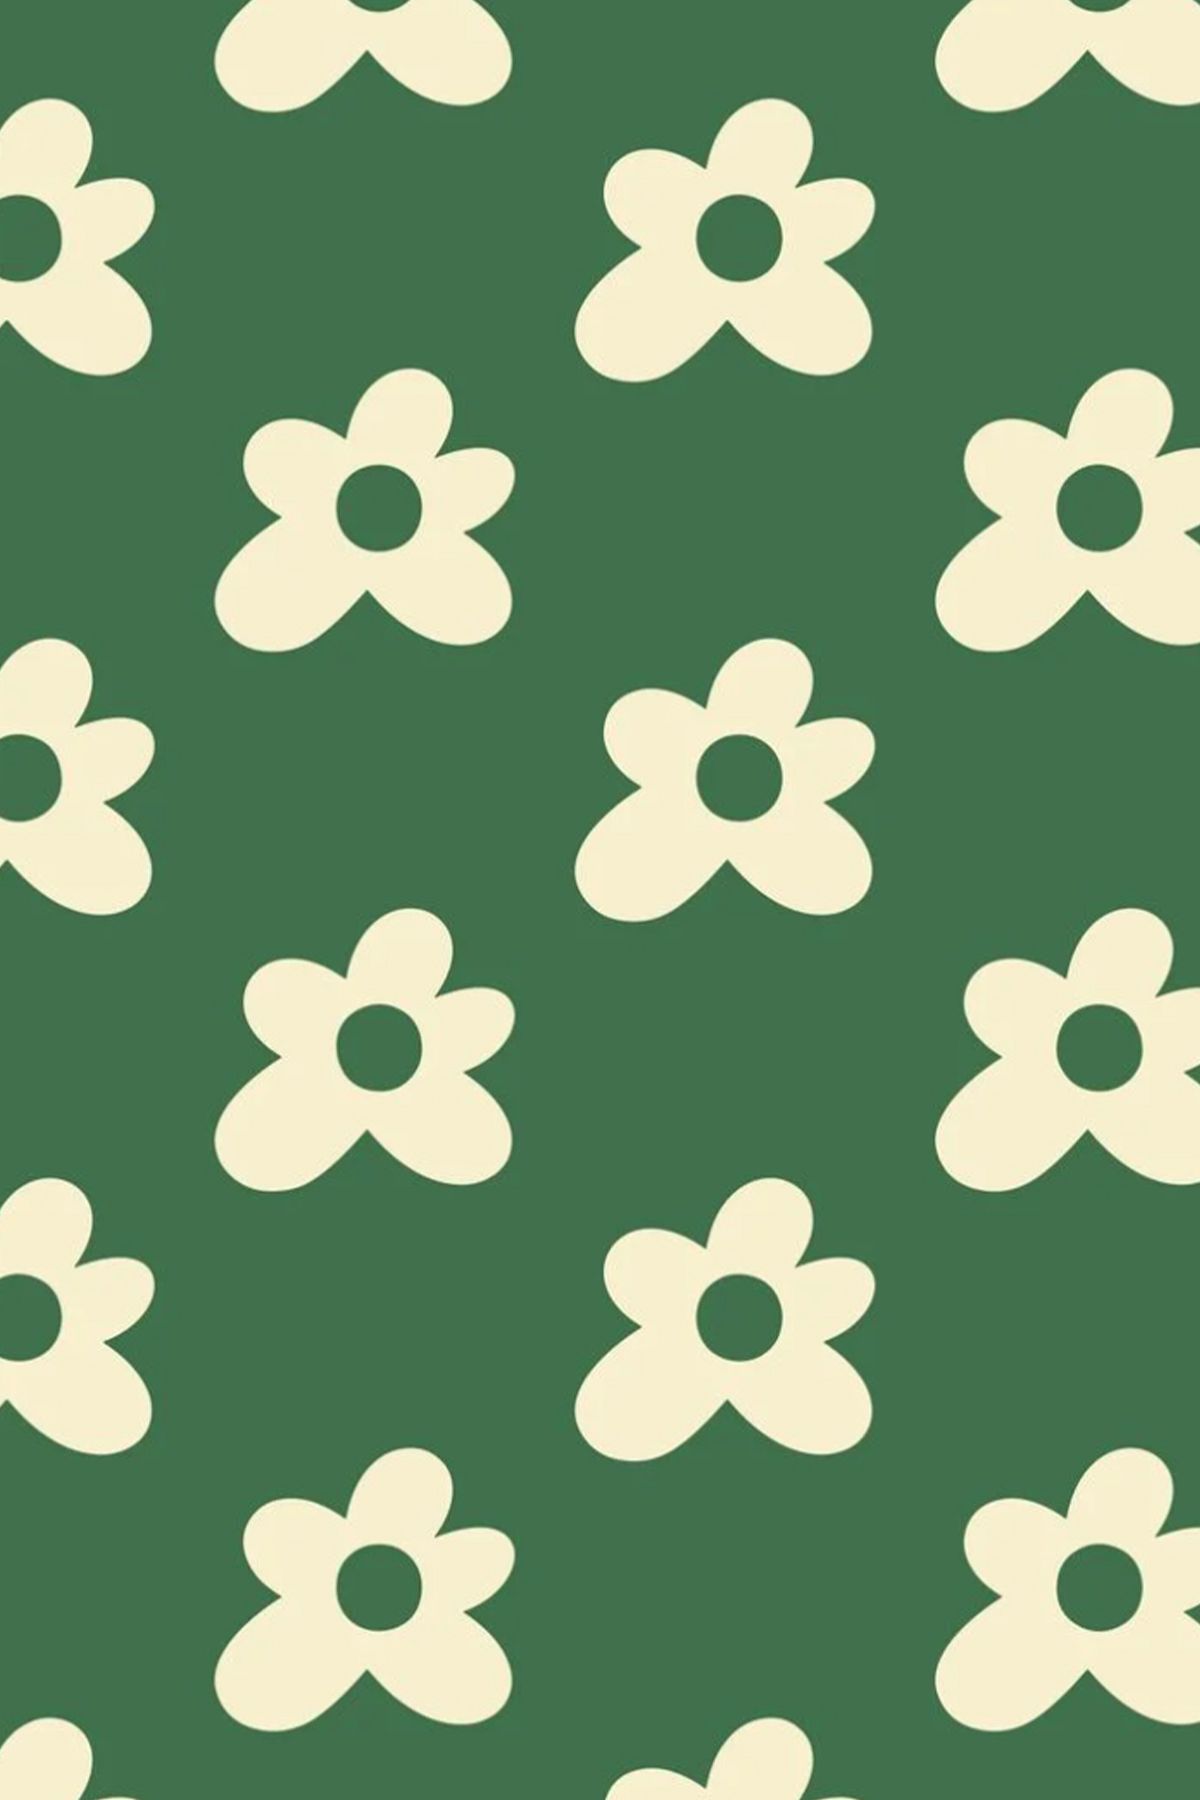 Green Ipad Wallpapers